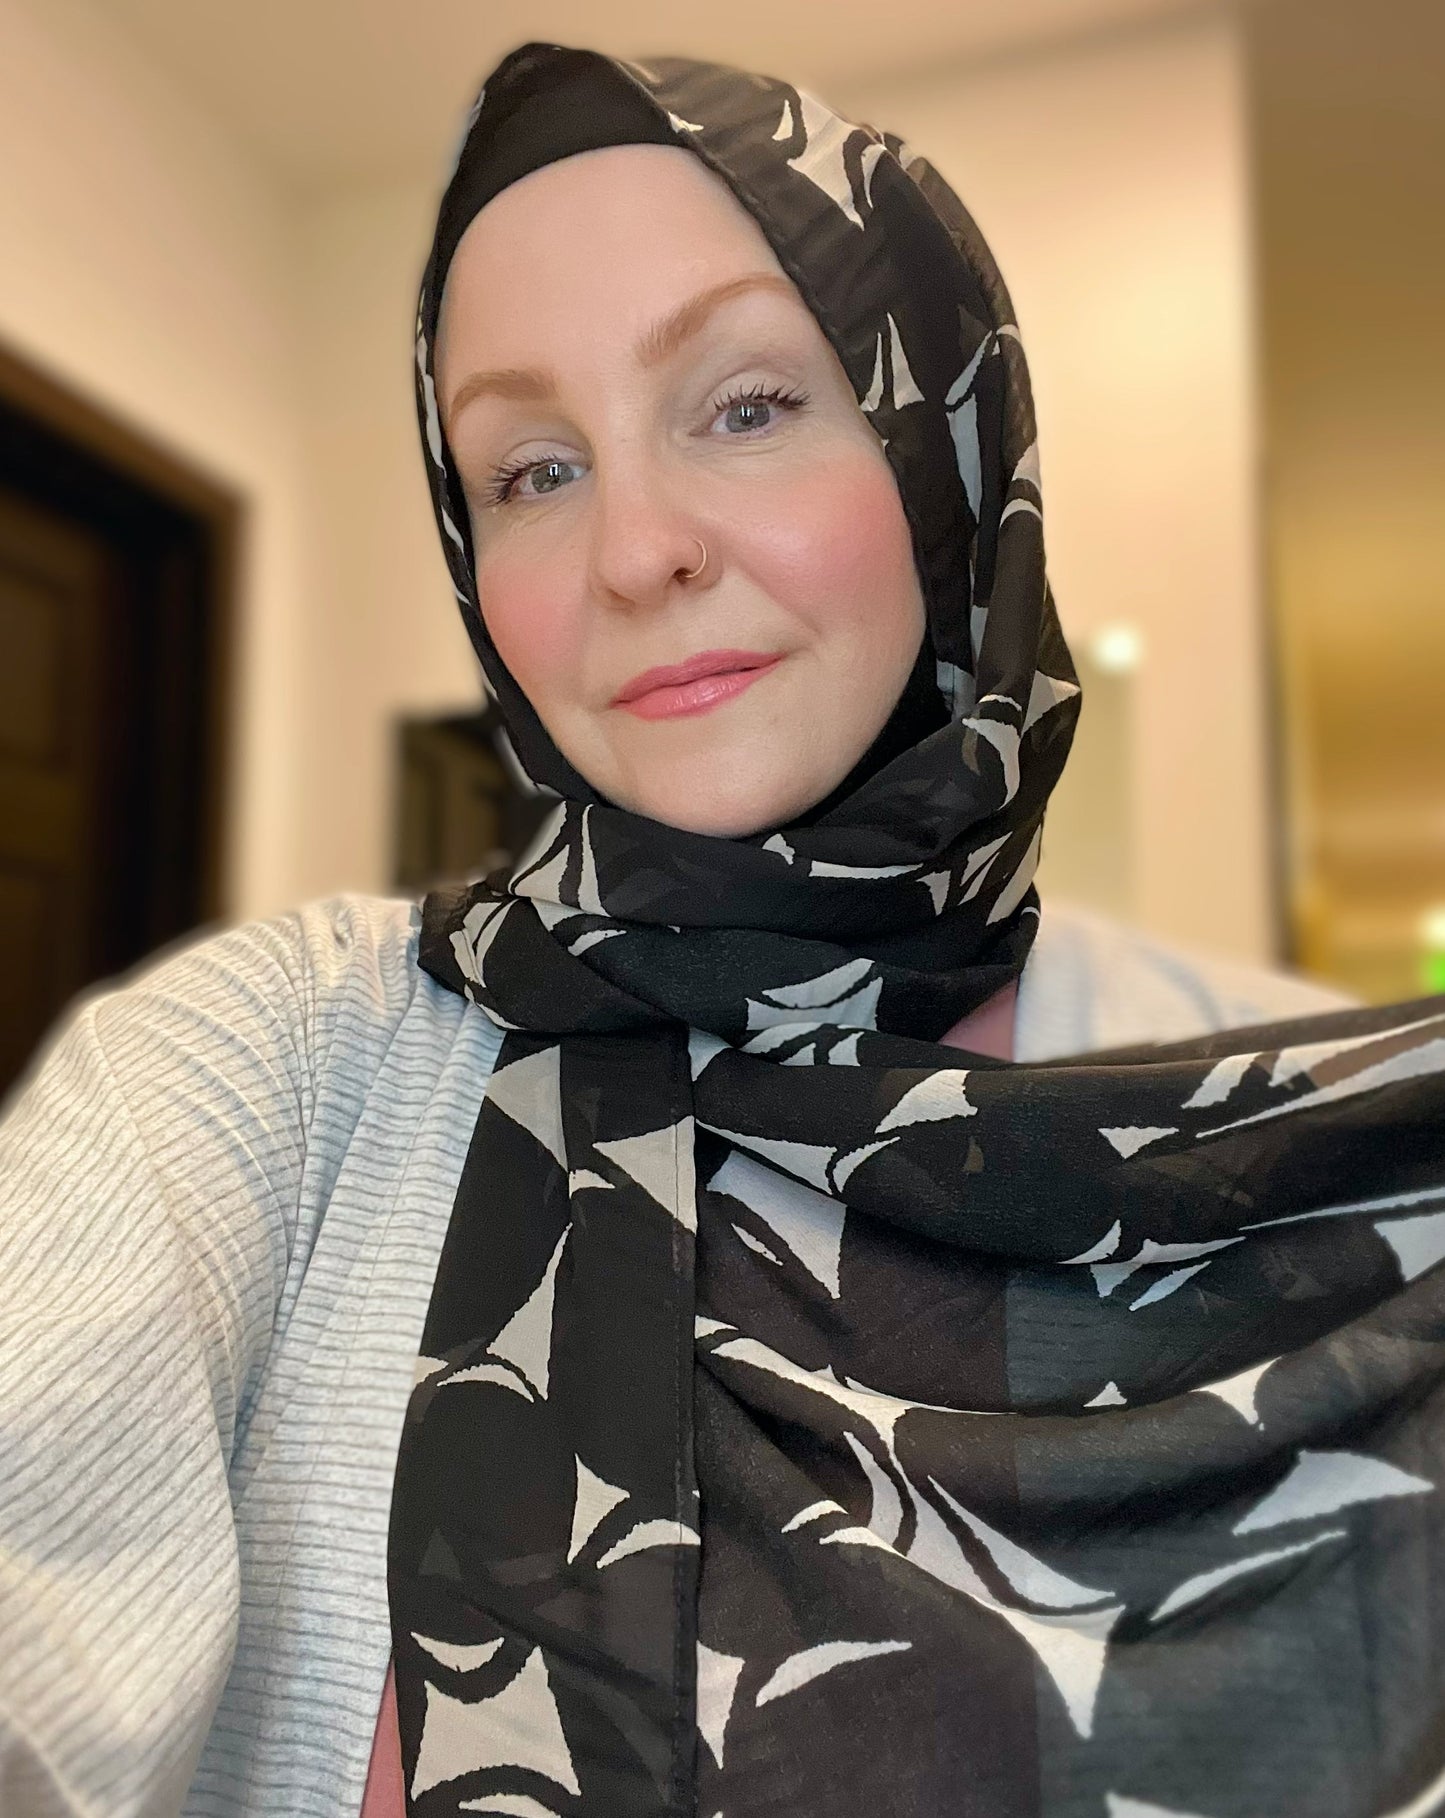 Chiffon Hijab: Caffeinated Night Cap